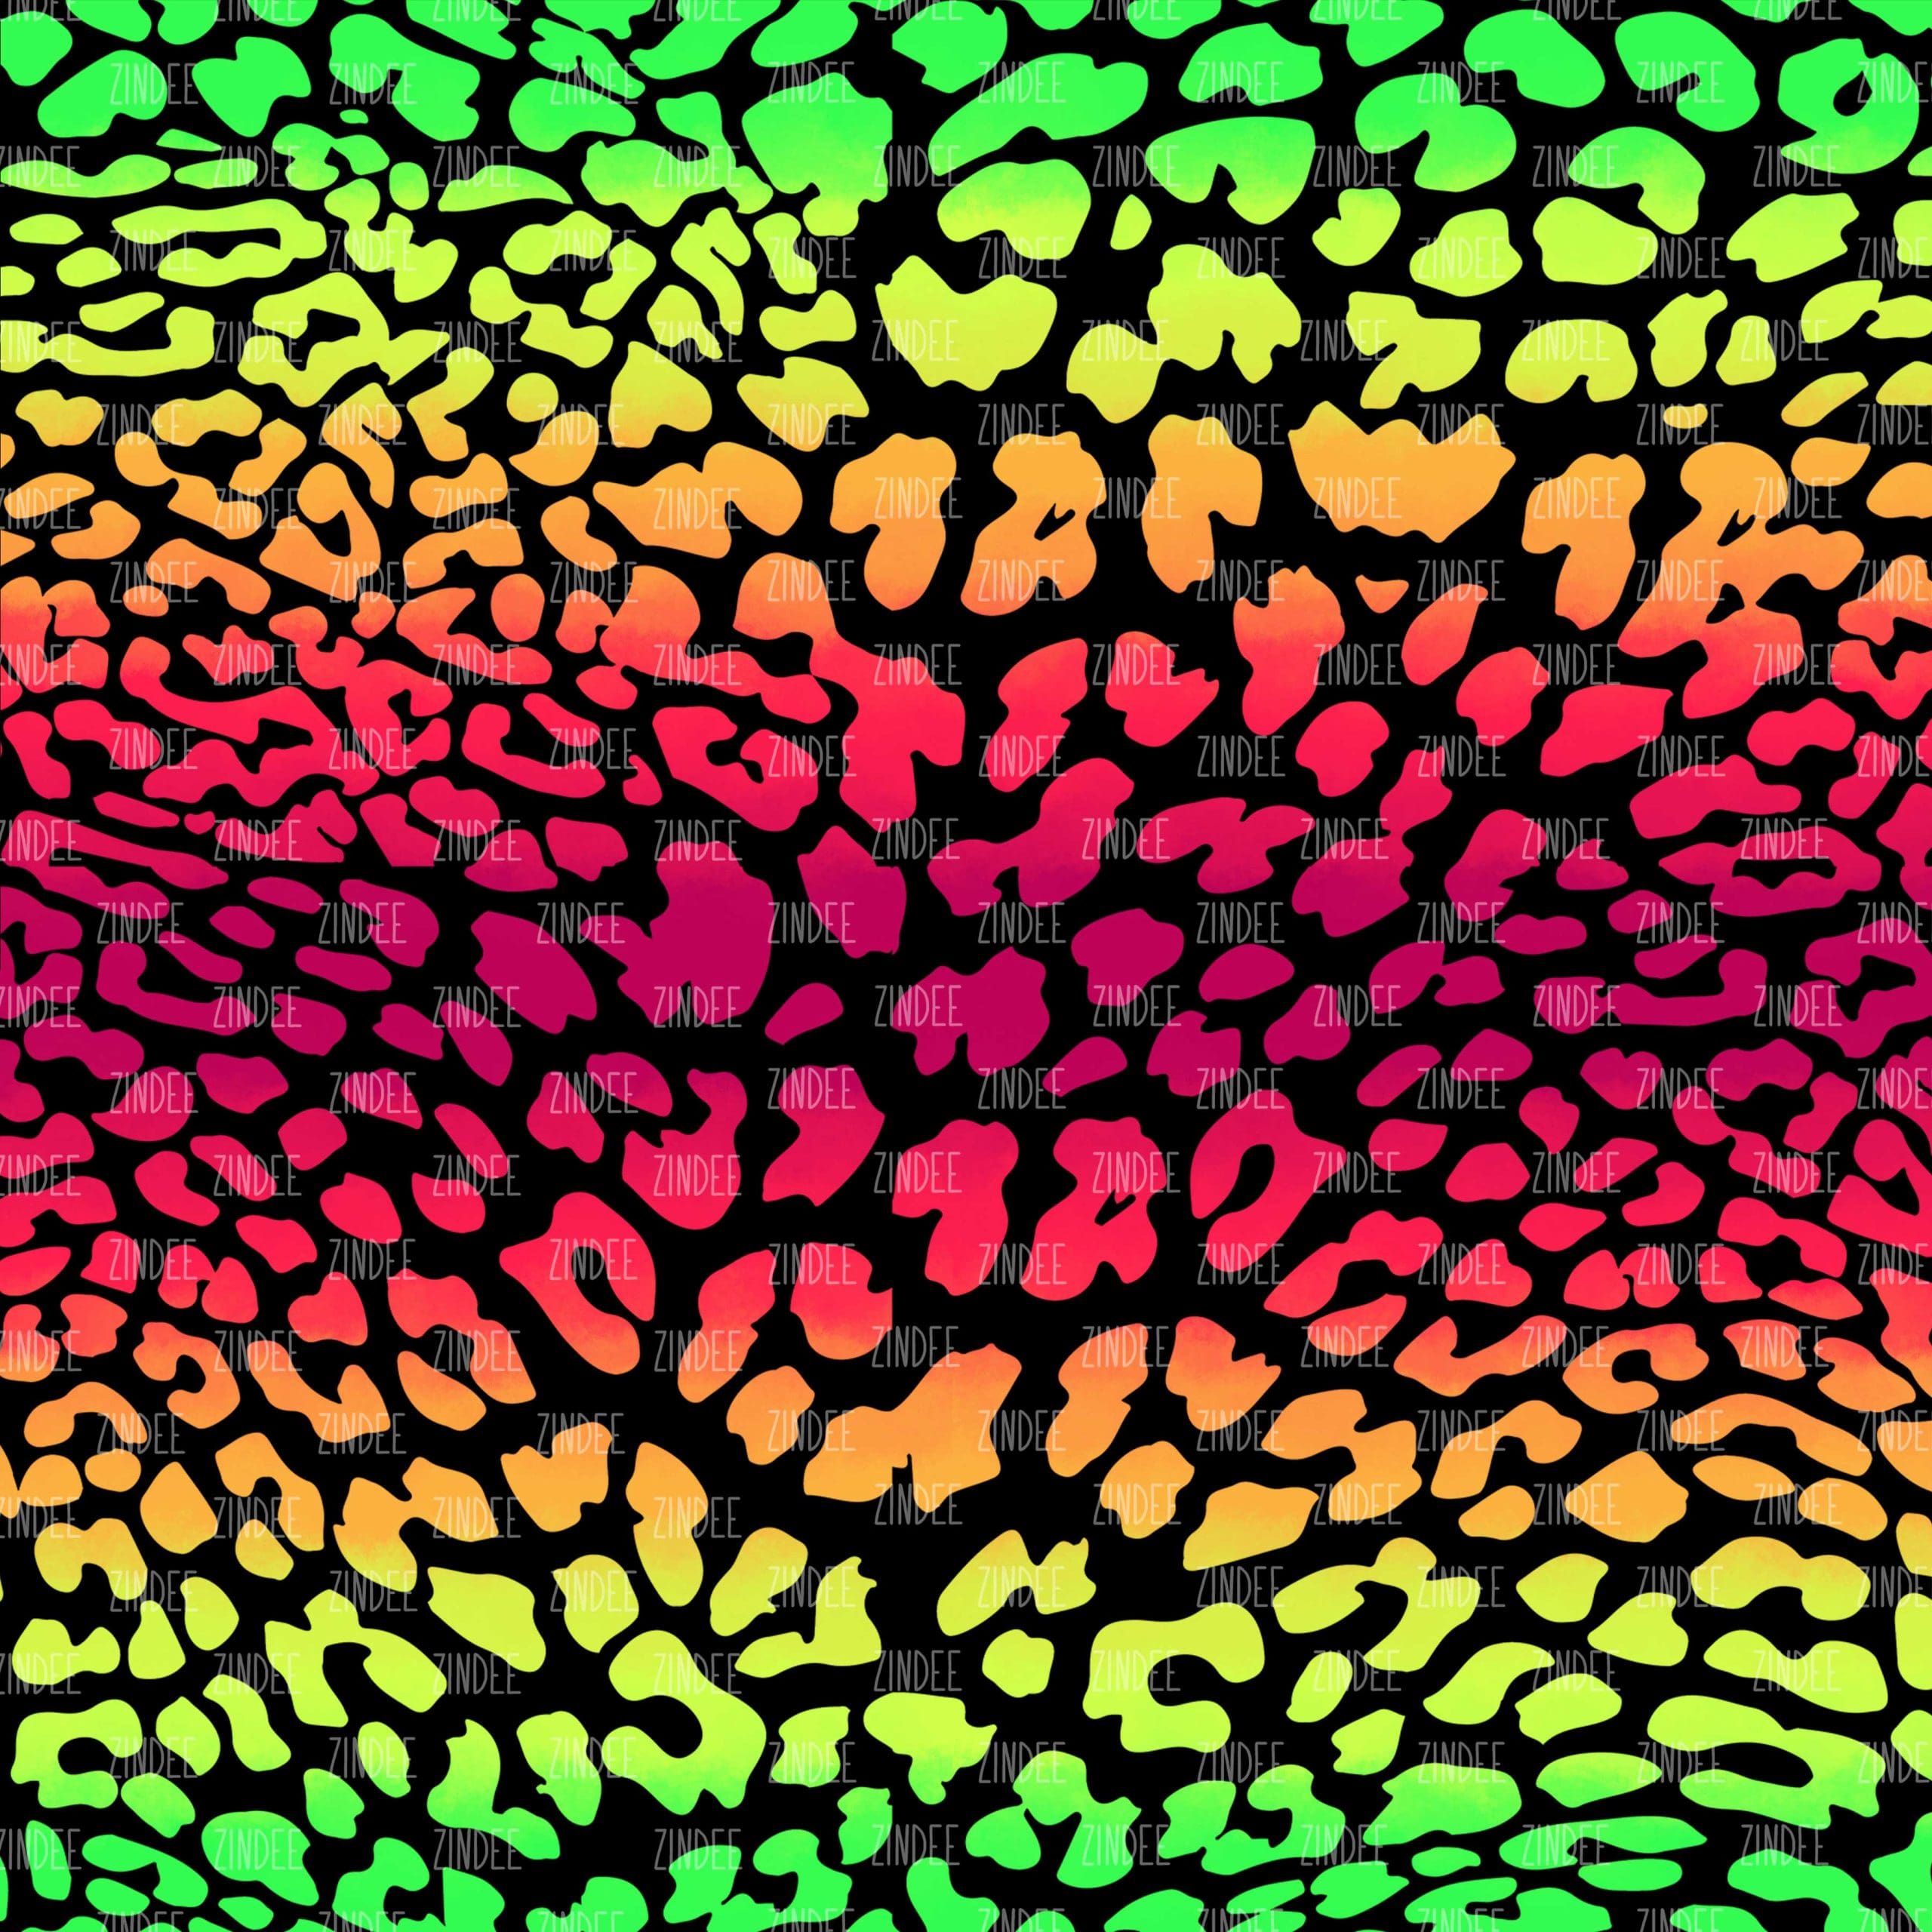 Swirls Neon (digital paper) –